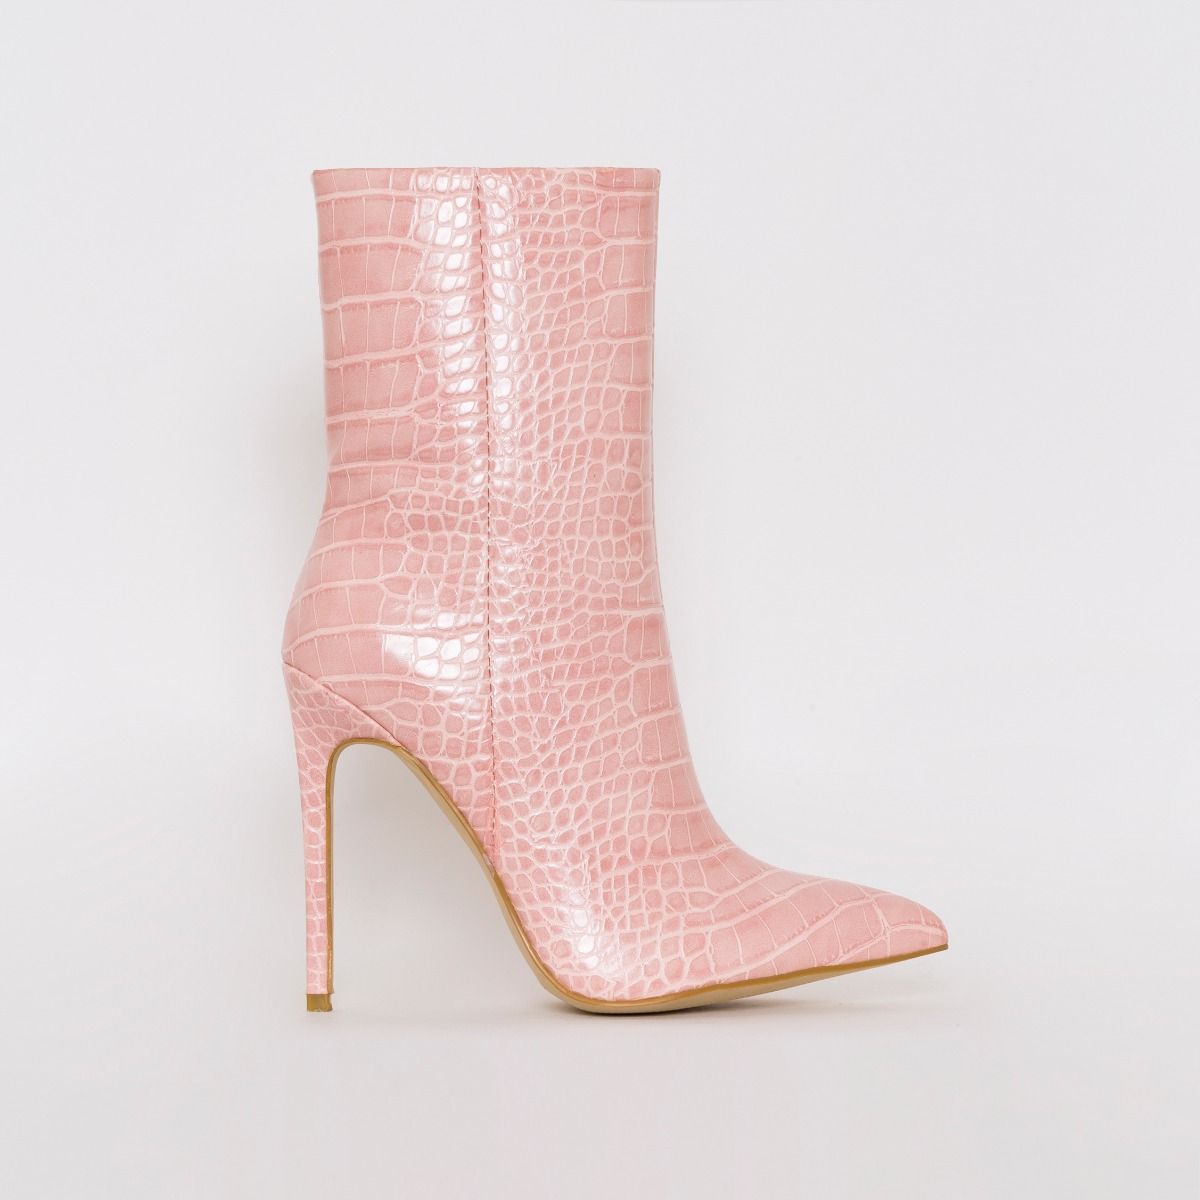 pink stiletto boots